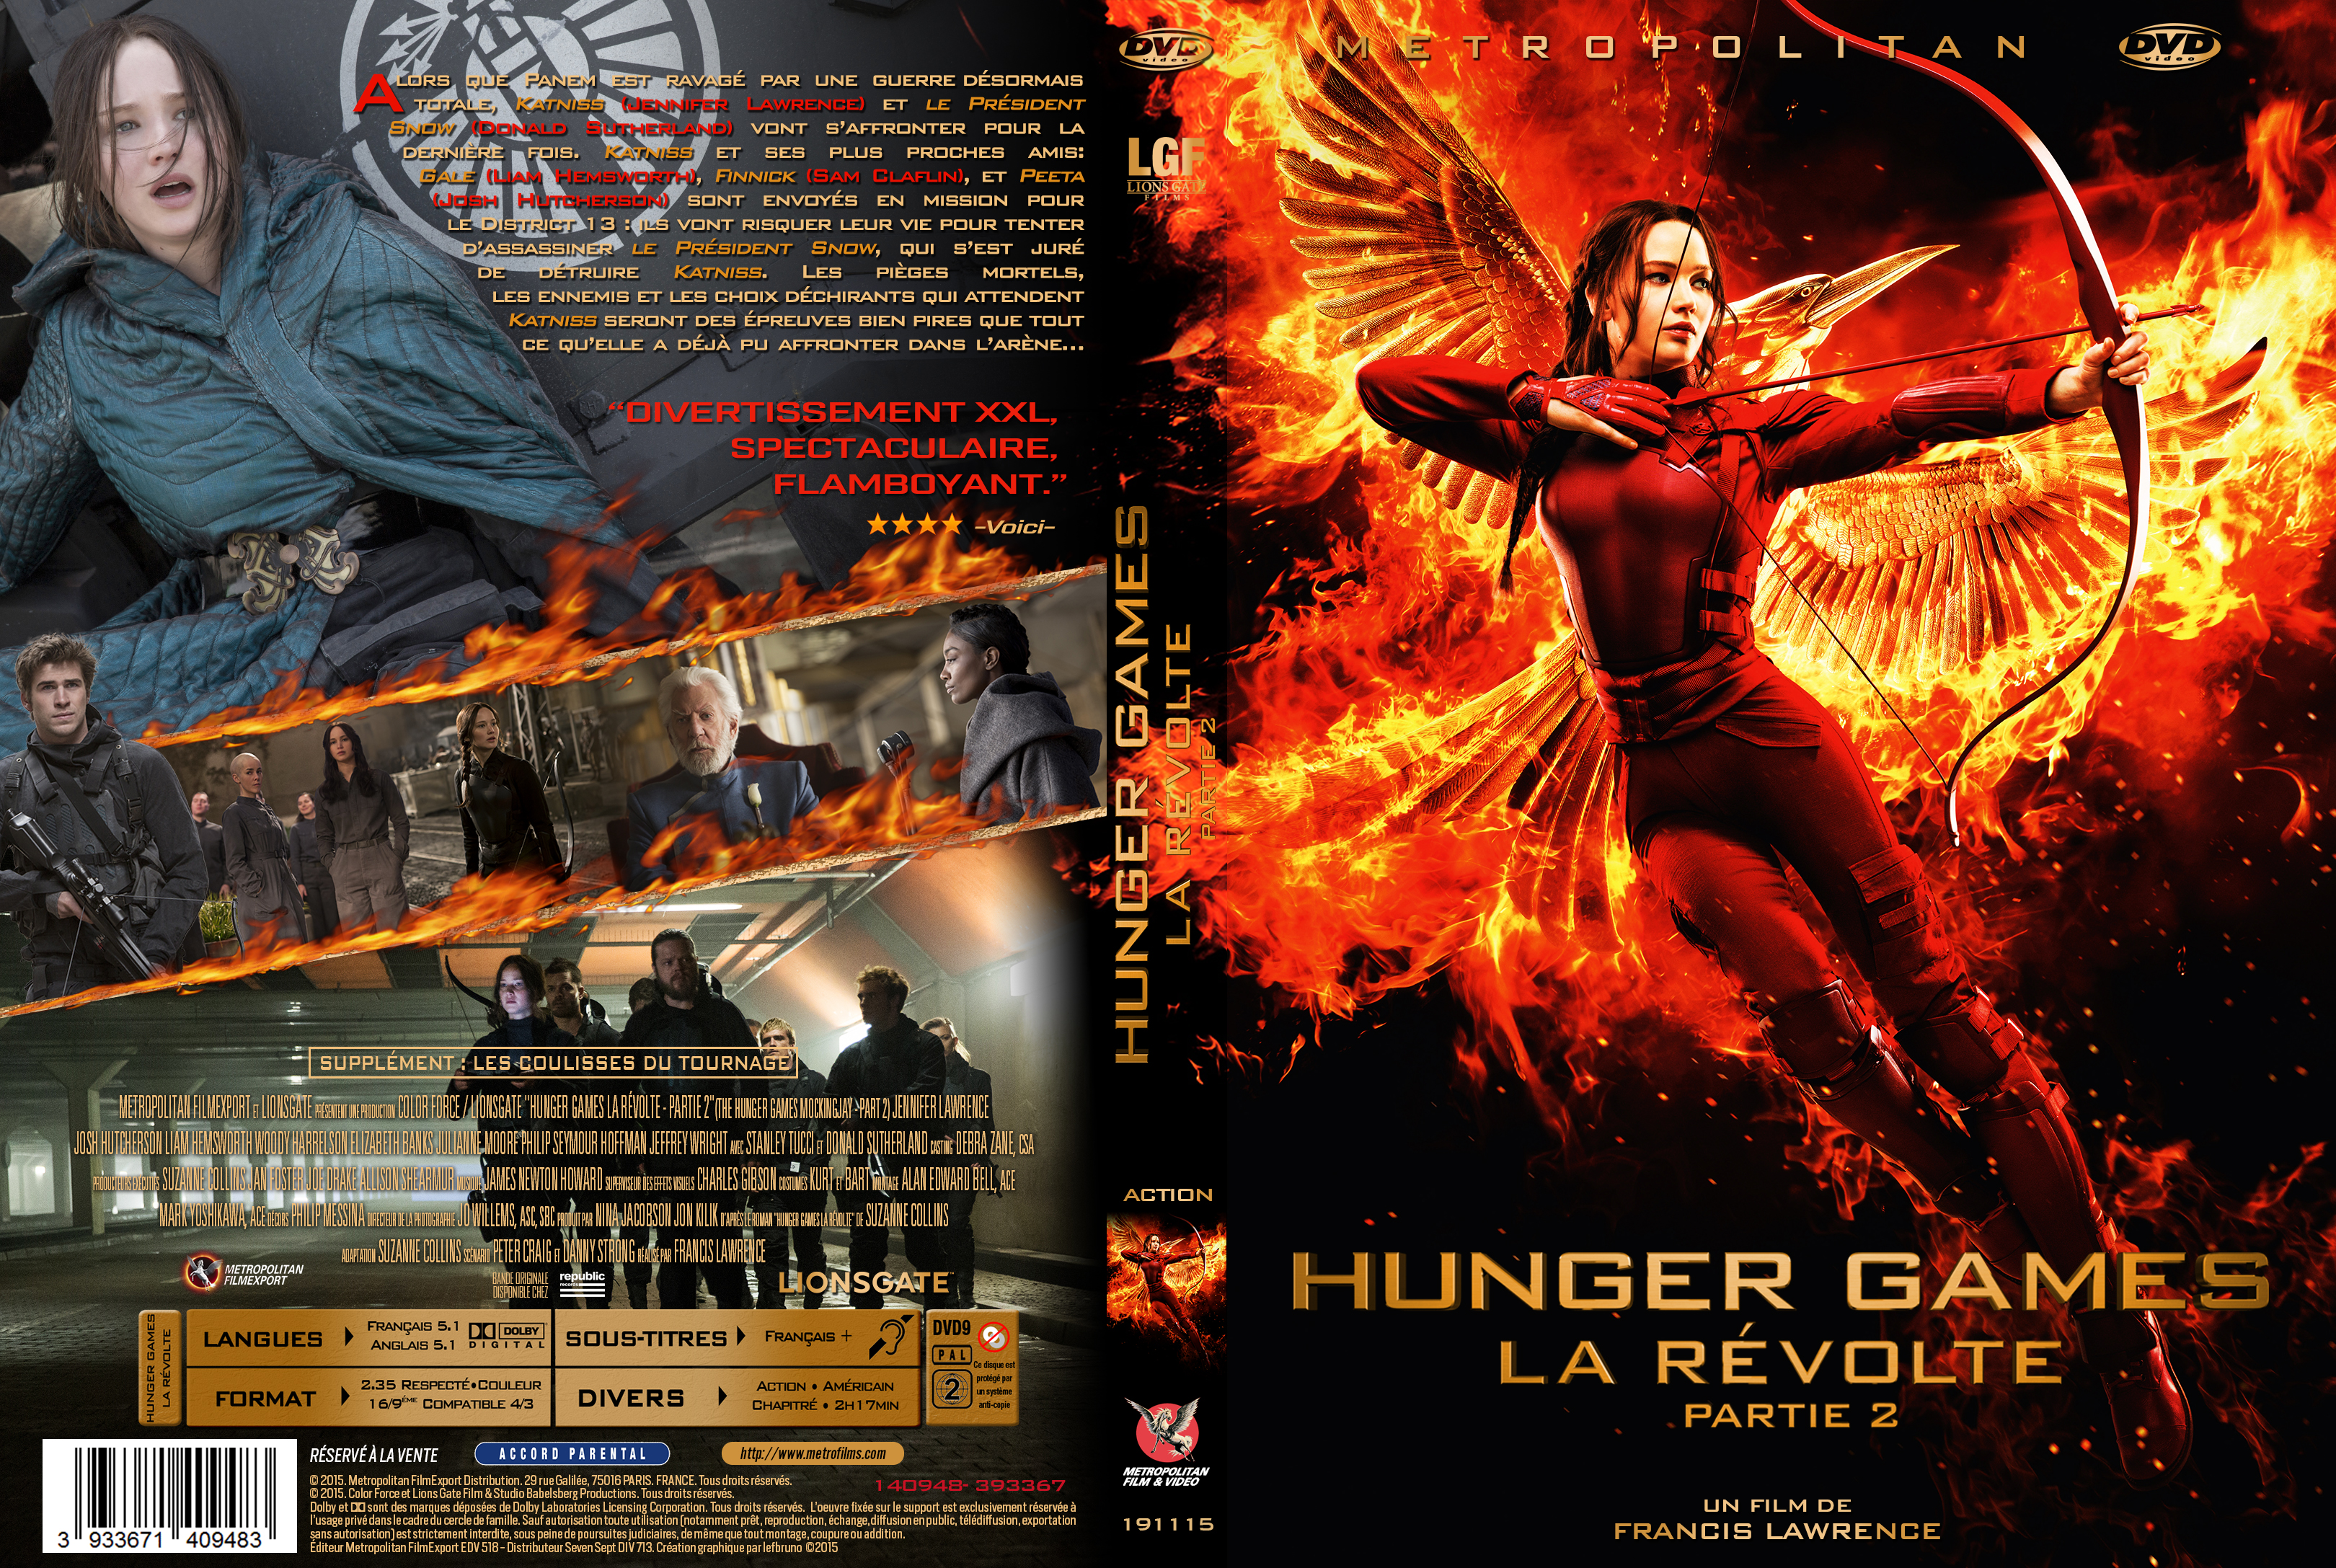 Jaquette DVD Hunger Games La Rvolte : Partie 2 custom v2